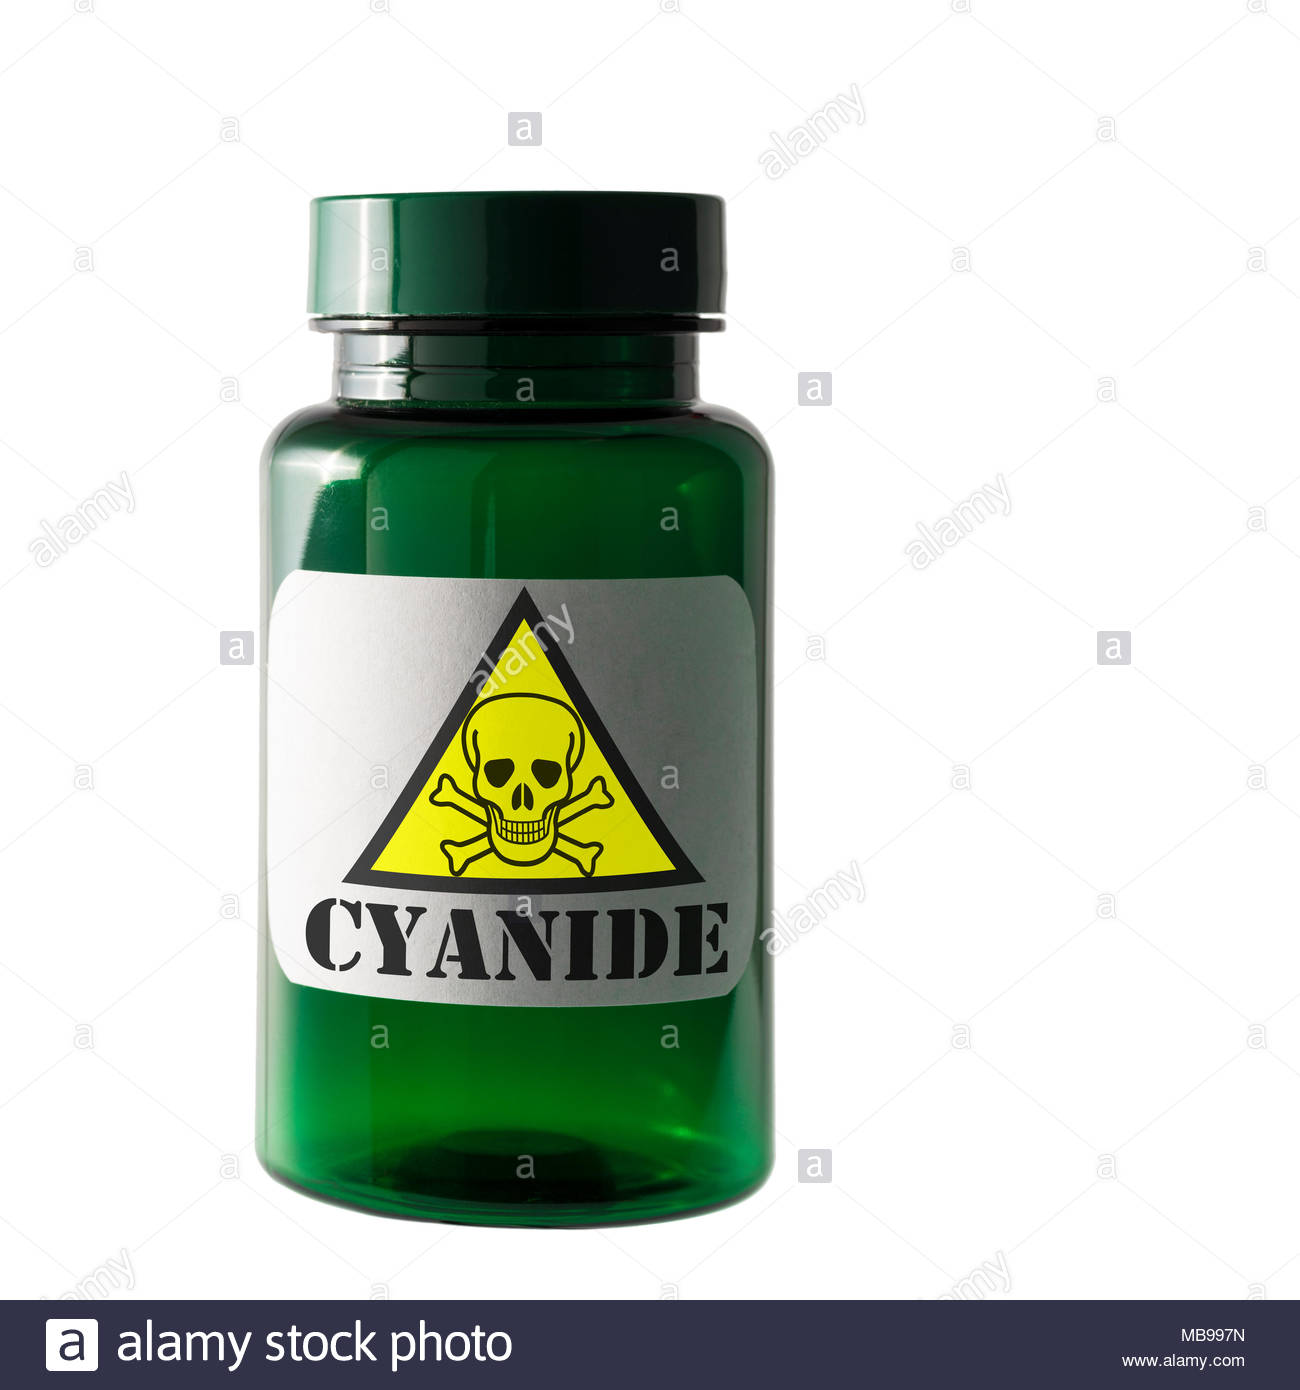 cyanide-dangerous-substance-label-dorset-england-uk-MB997N.jpg